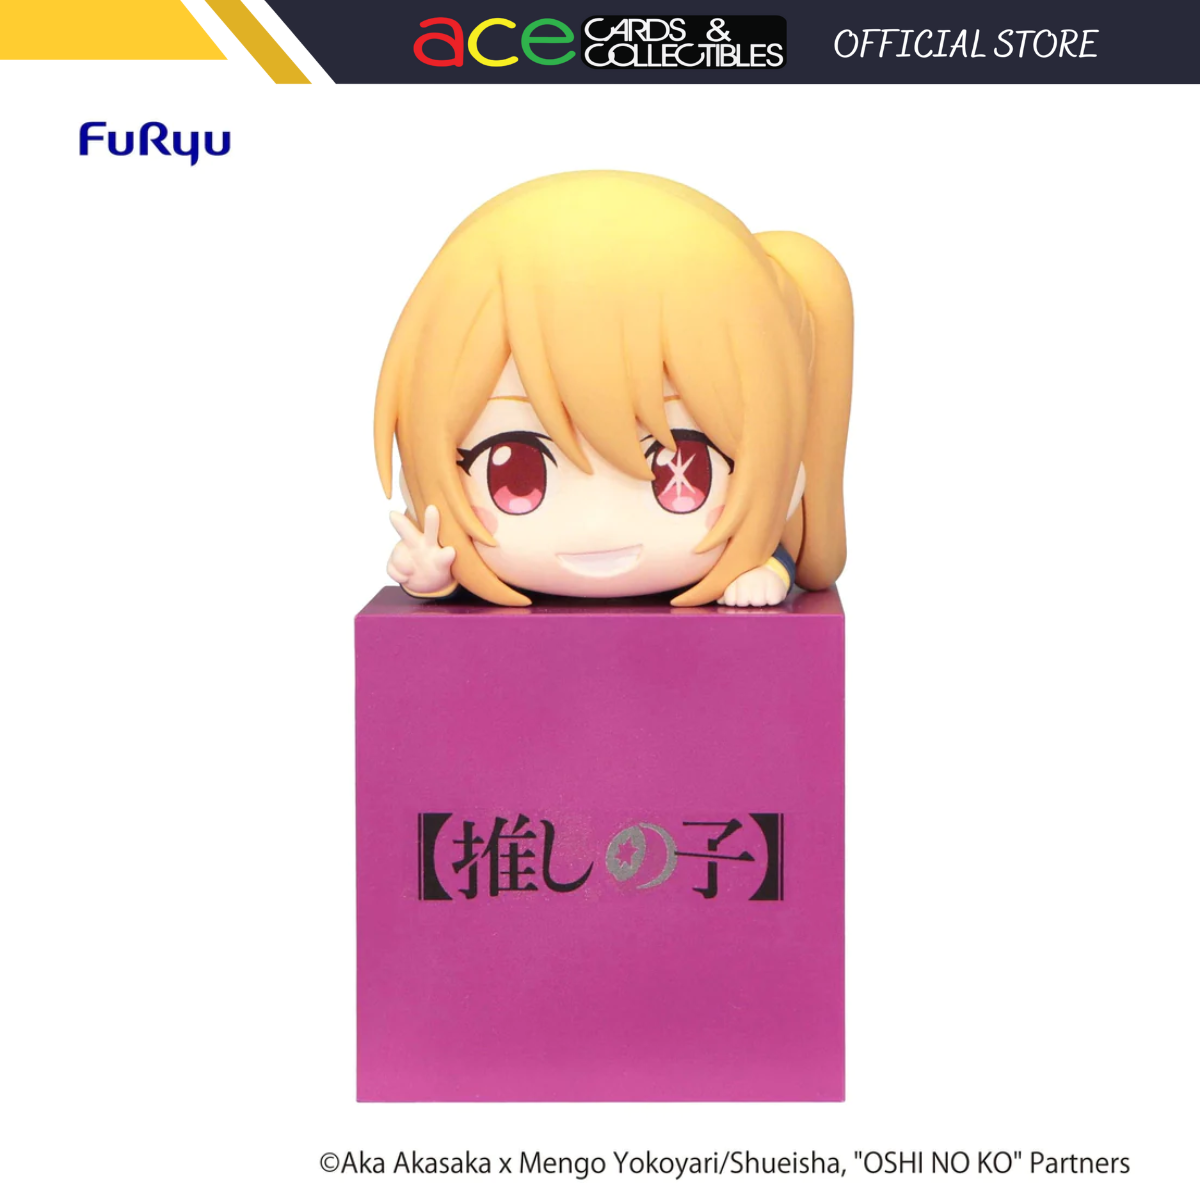 OSHI NO KO Hikkake Figure "Ruby"-FuRyu-Ace Cards & Collectibles